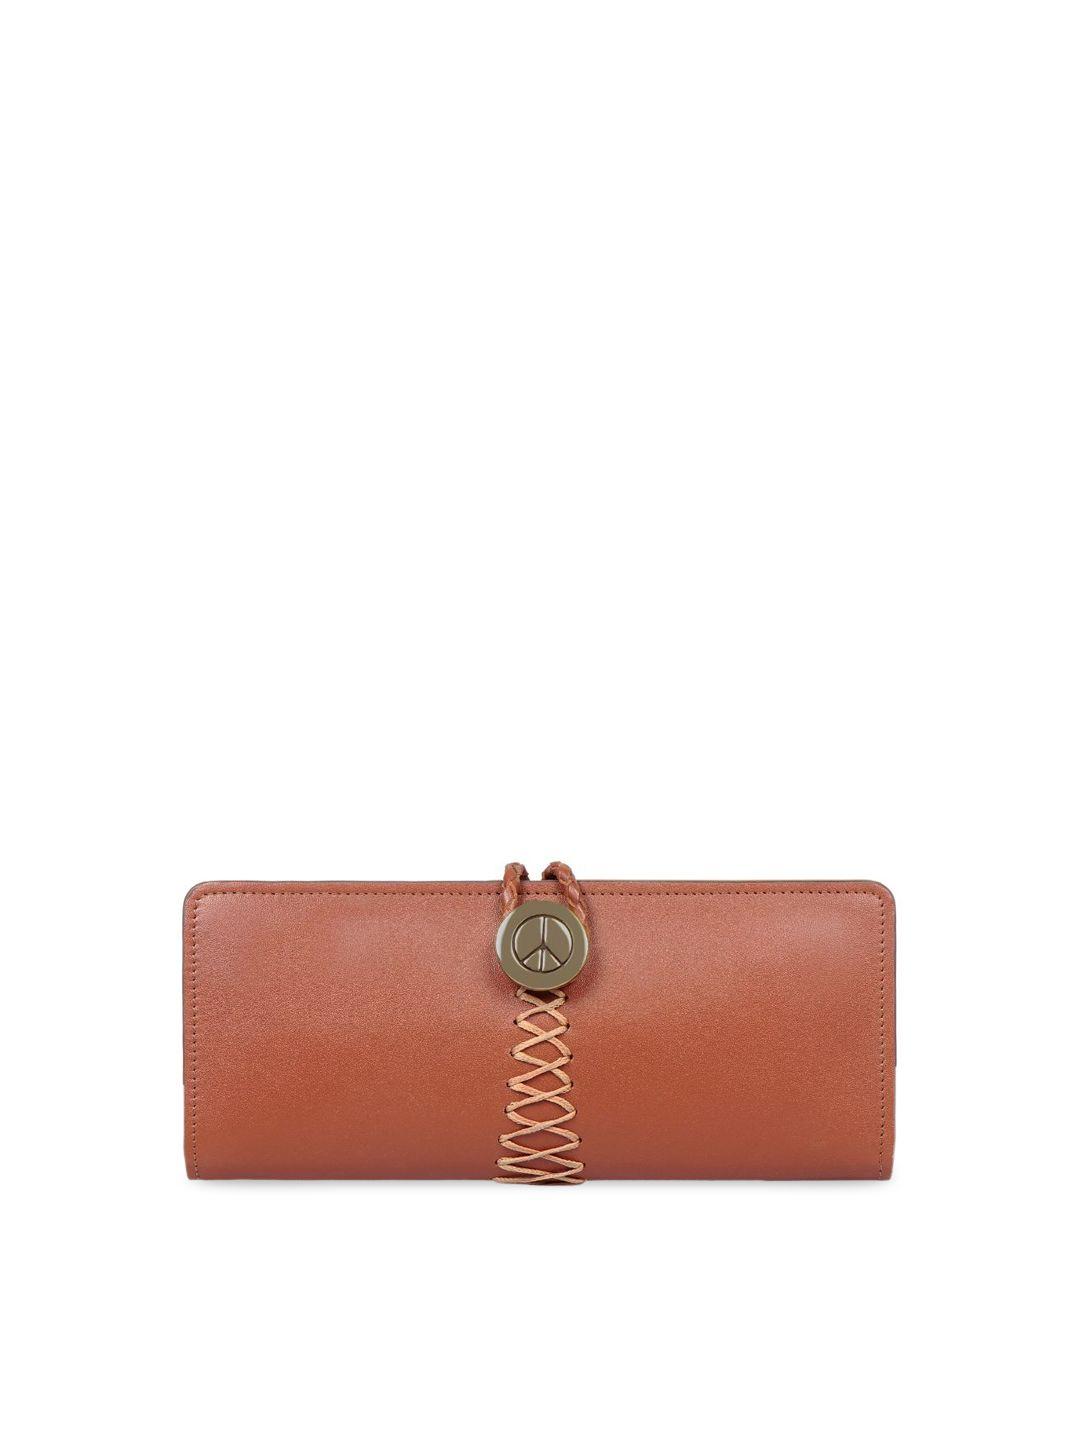 hidesign tan leather purse clutch